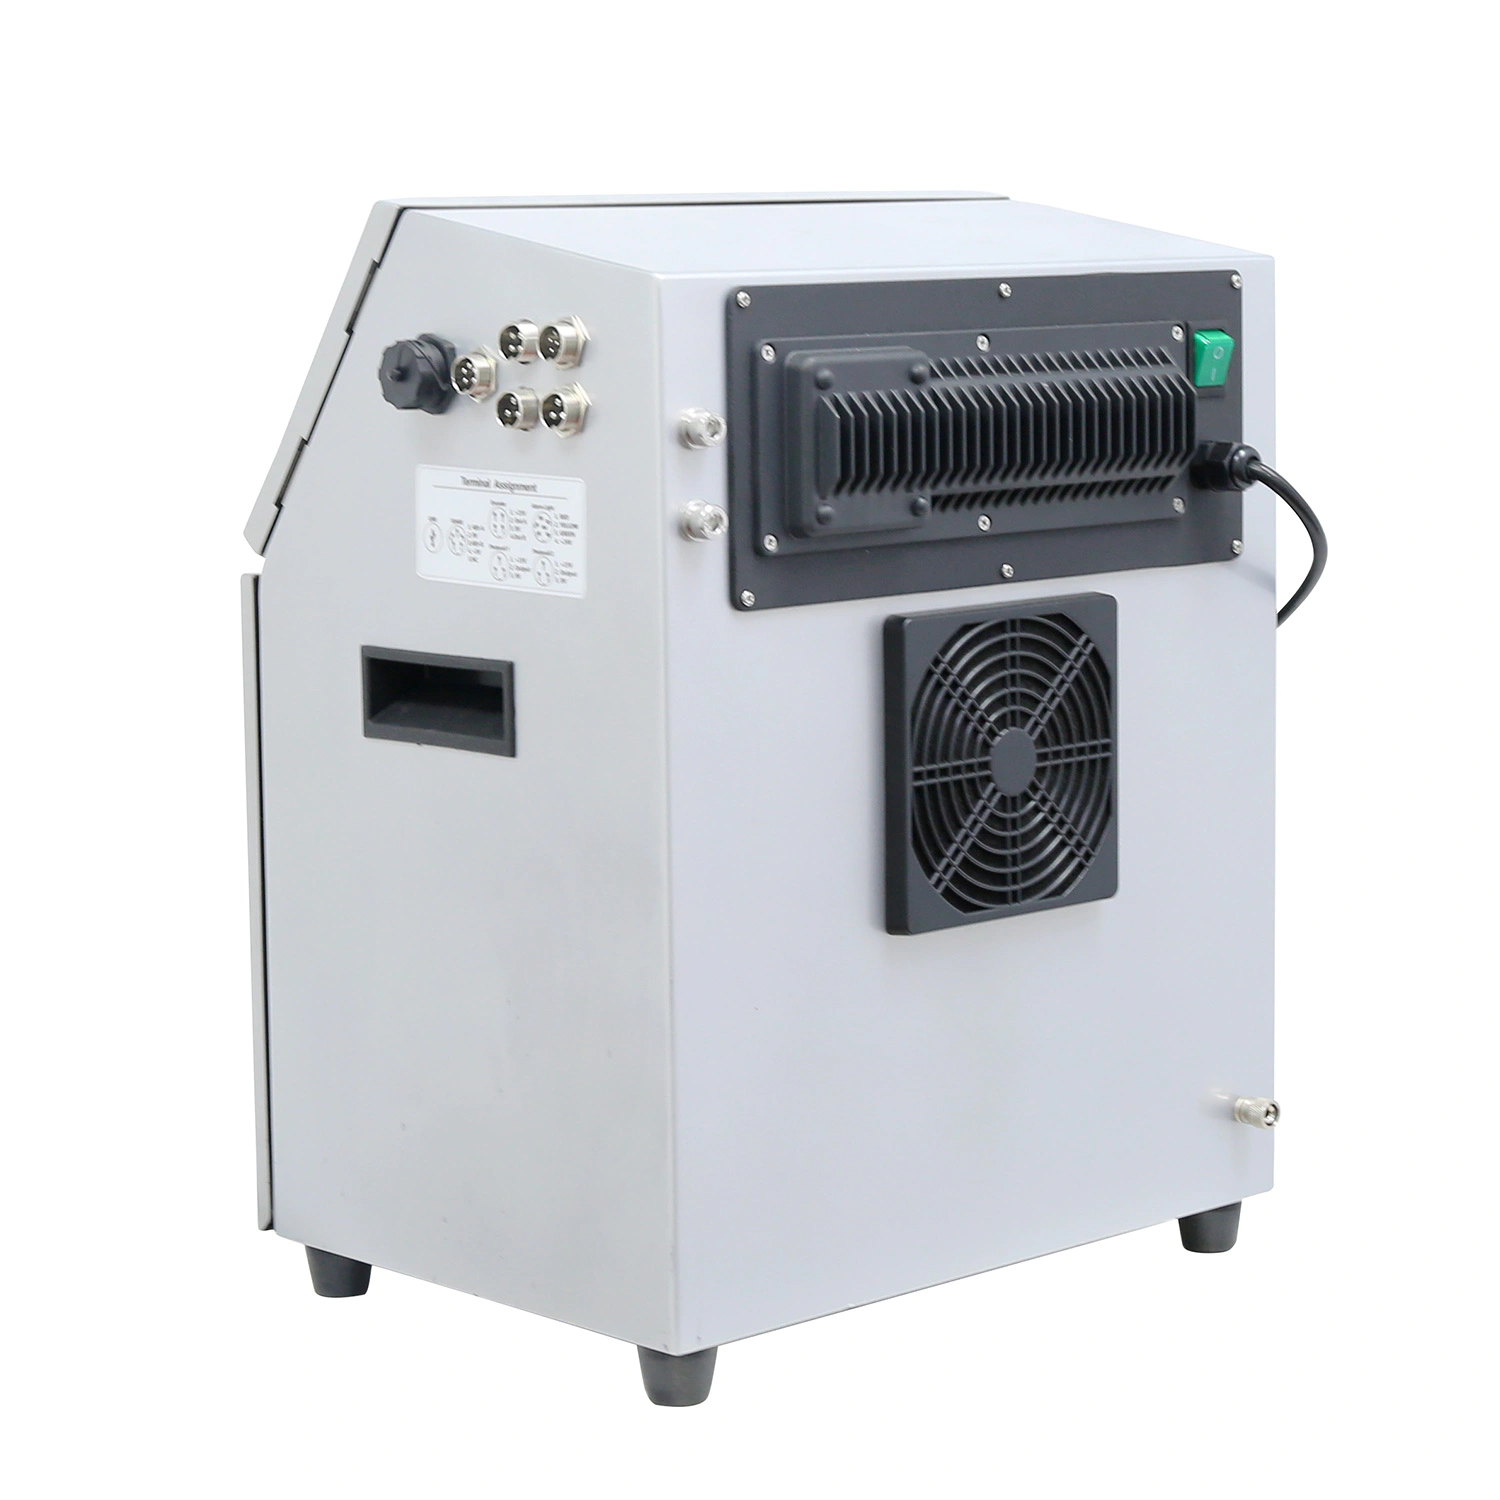 Lead Tech Lt800 Color Printing Machine Inkjet Printer